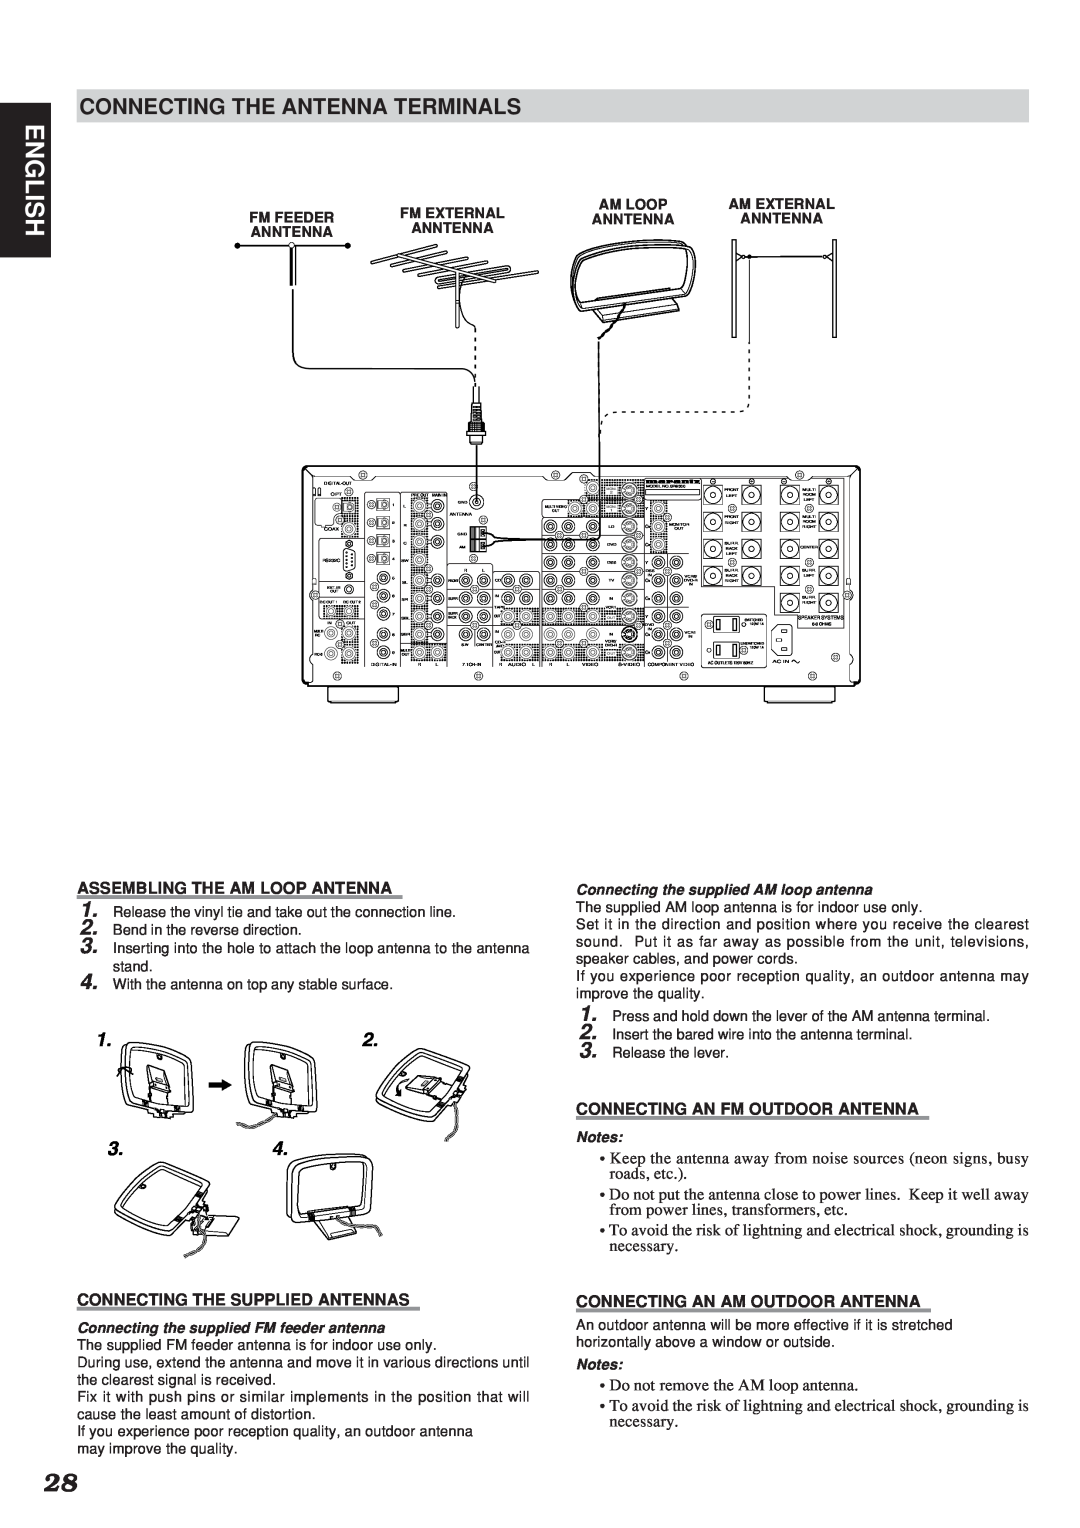 Marantz SR9300 manual English, 1.2, Assembling The Am Loop Antenna, Connecting The Supplied Antennas 